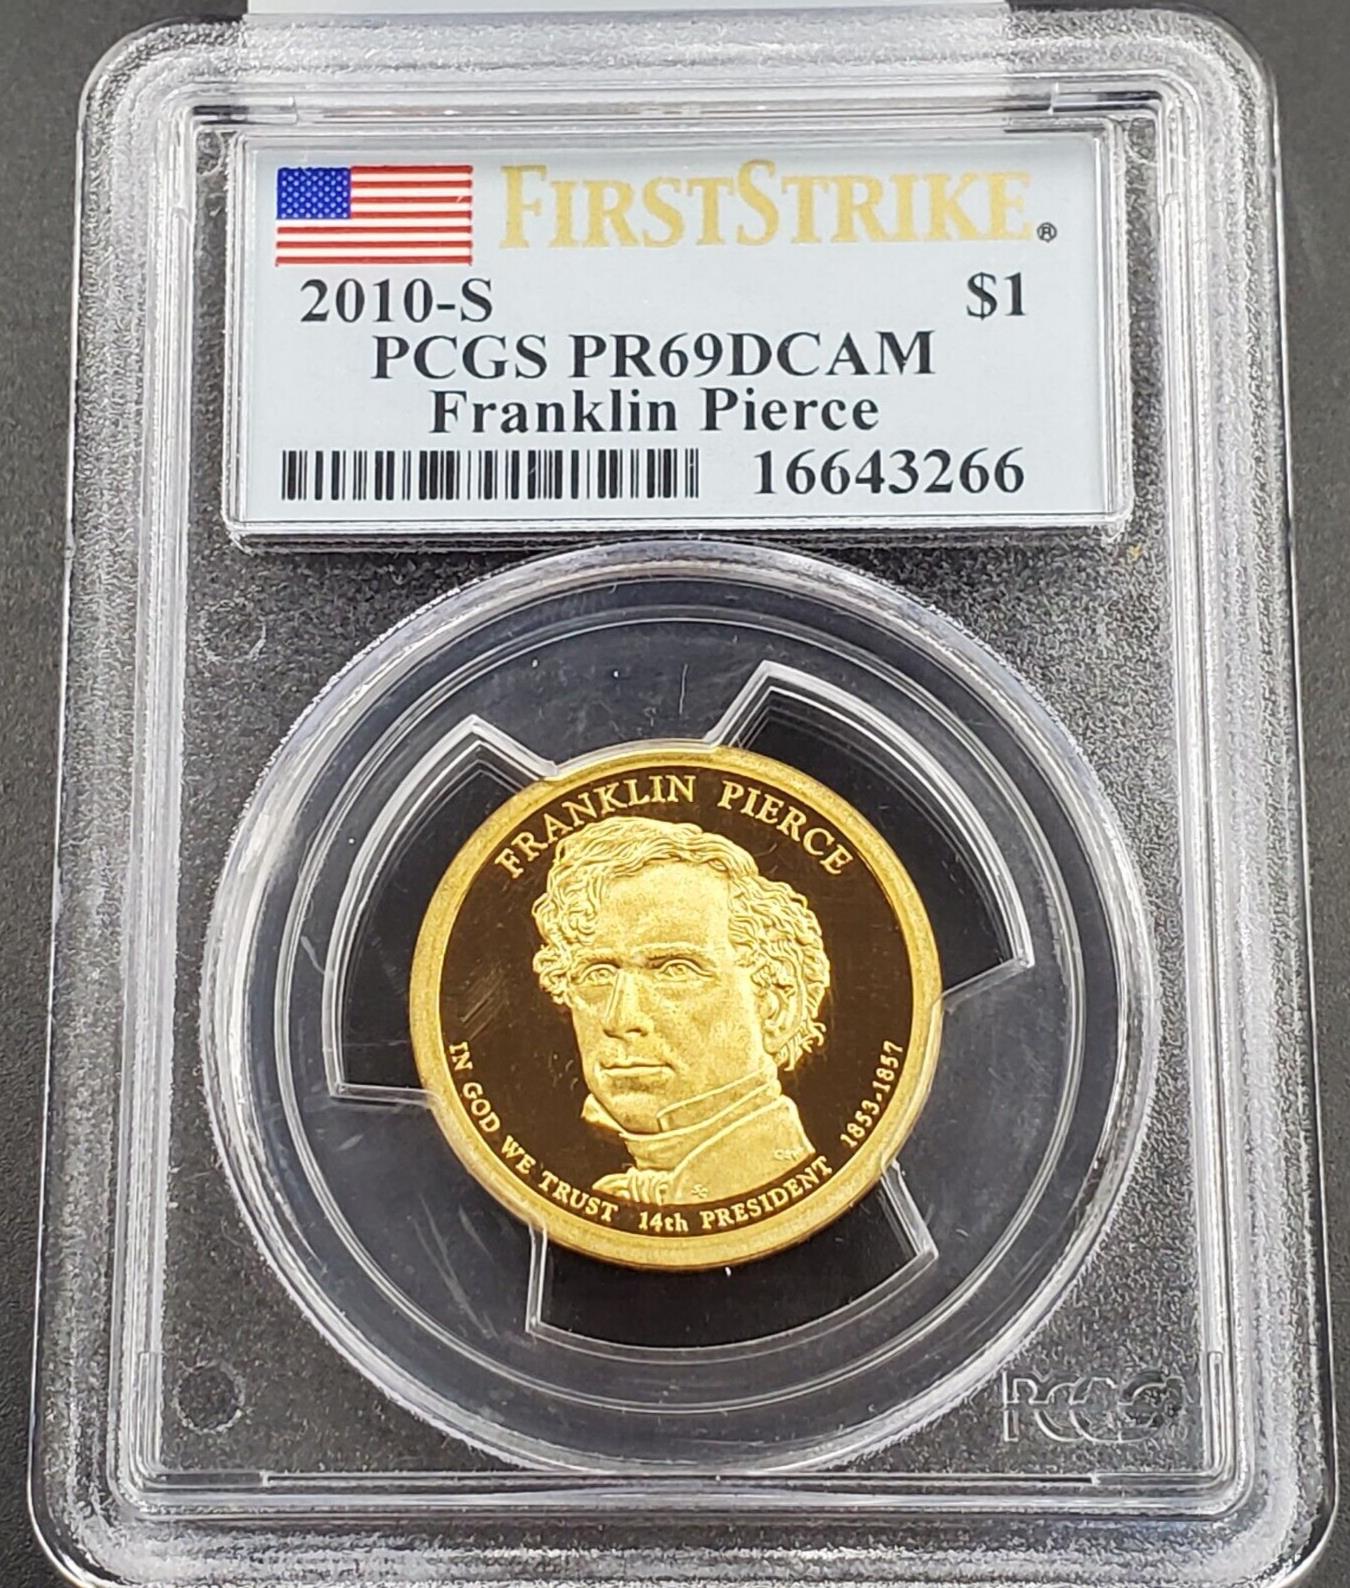 2010 S Franklin Pierce Presidential Dollar Coin PCGS PF69 DCAM #2